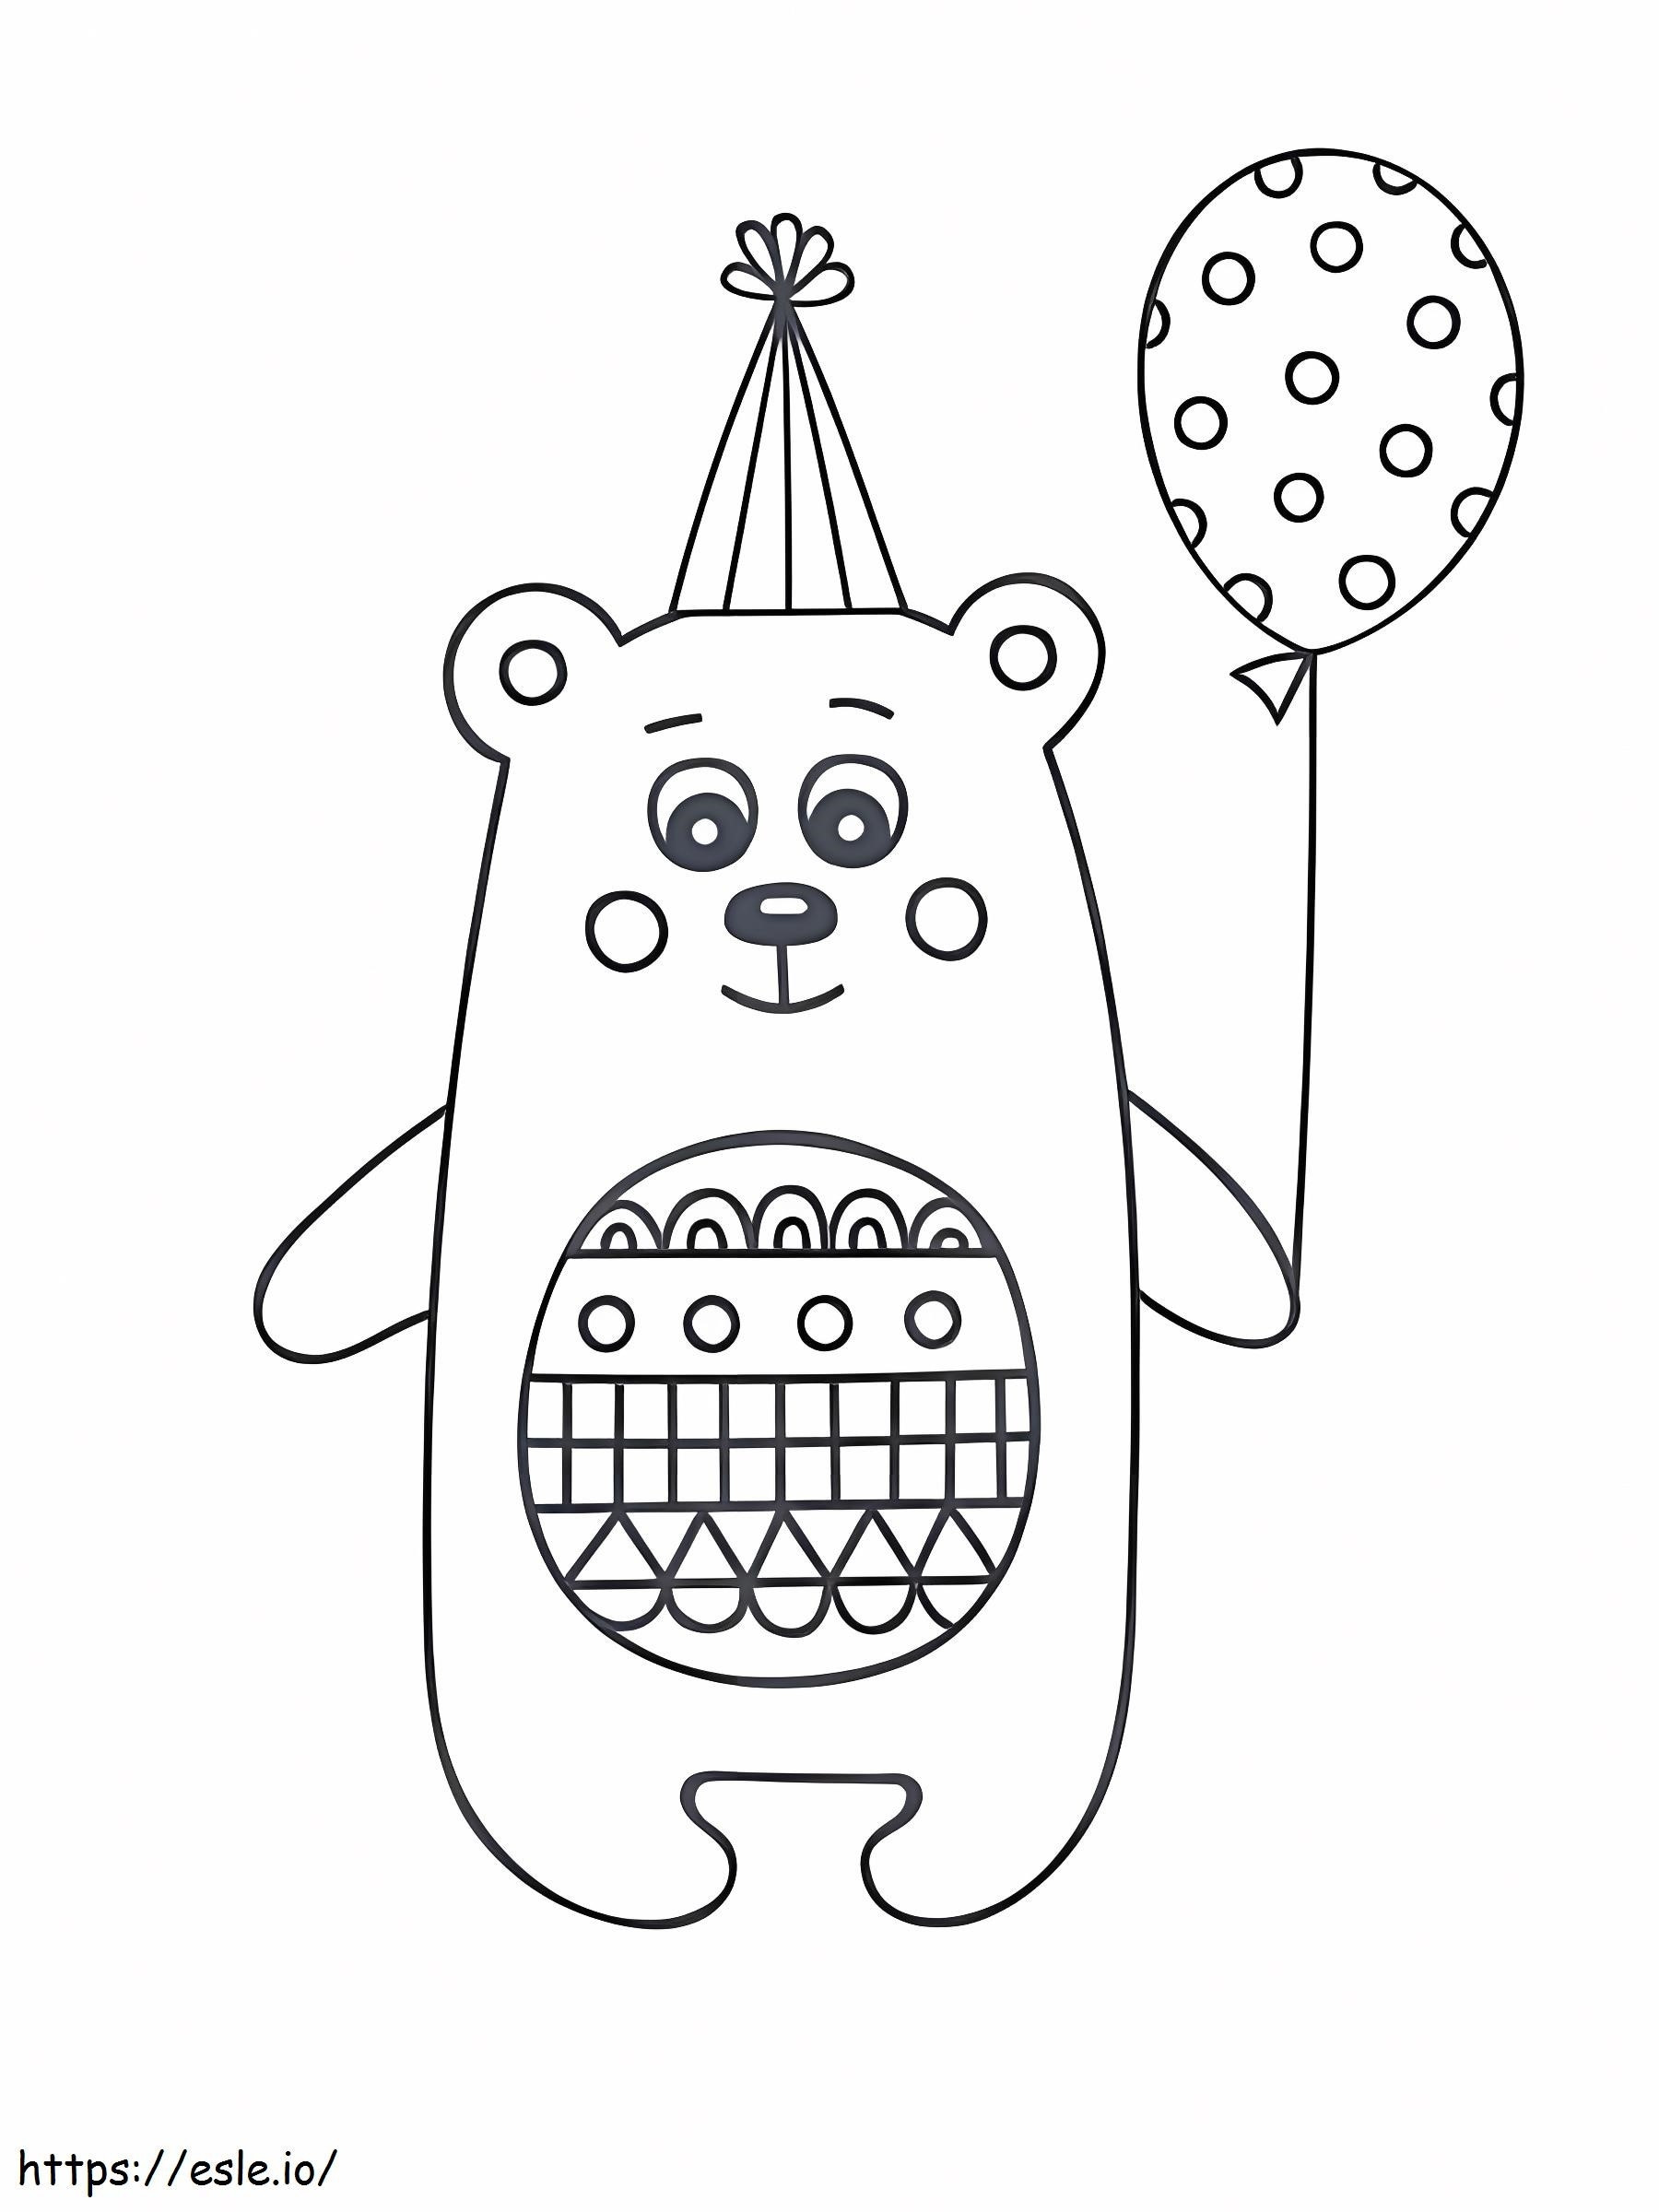 Kawaii-Bär mit Ballon ausmalbilder